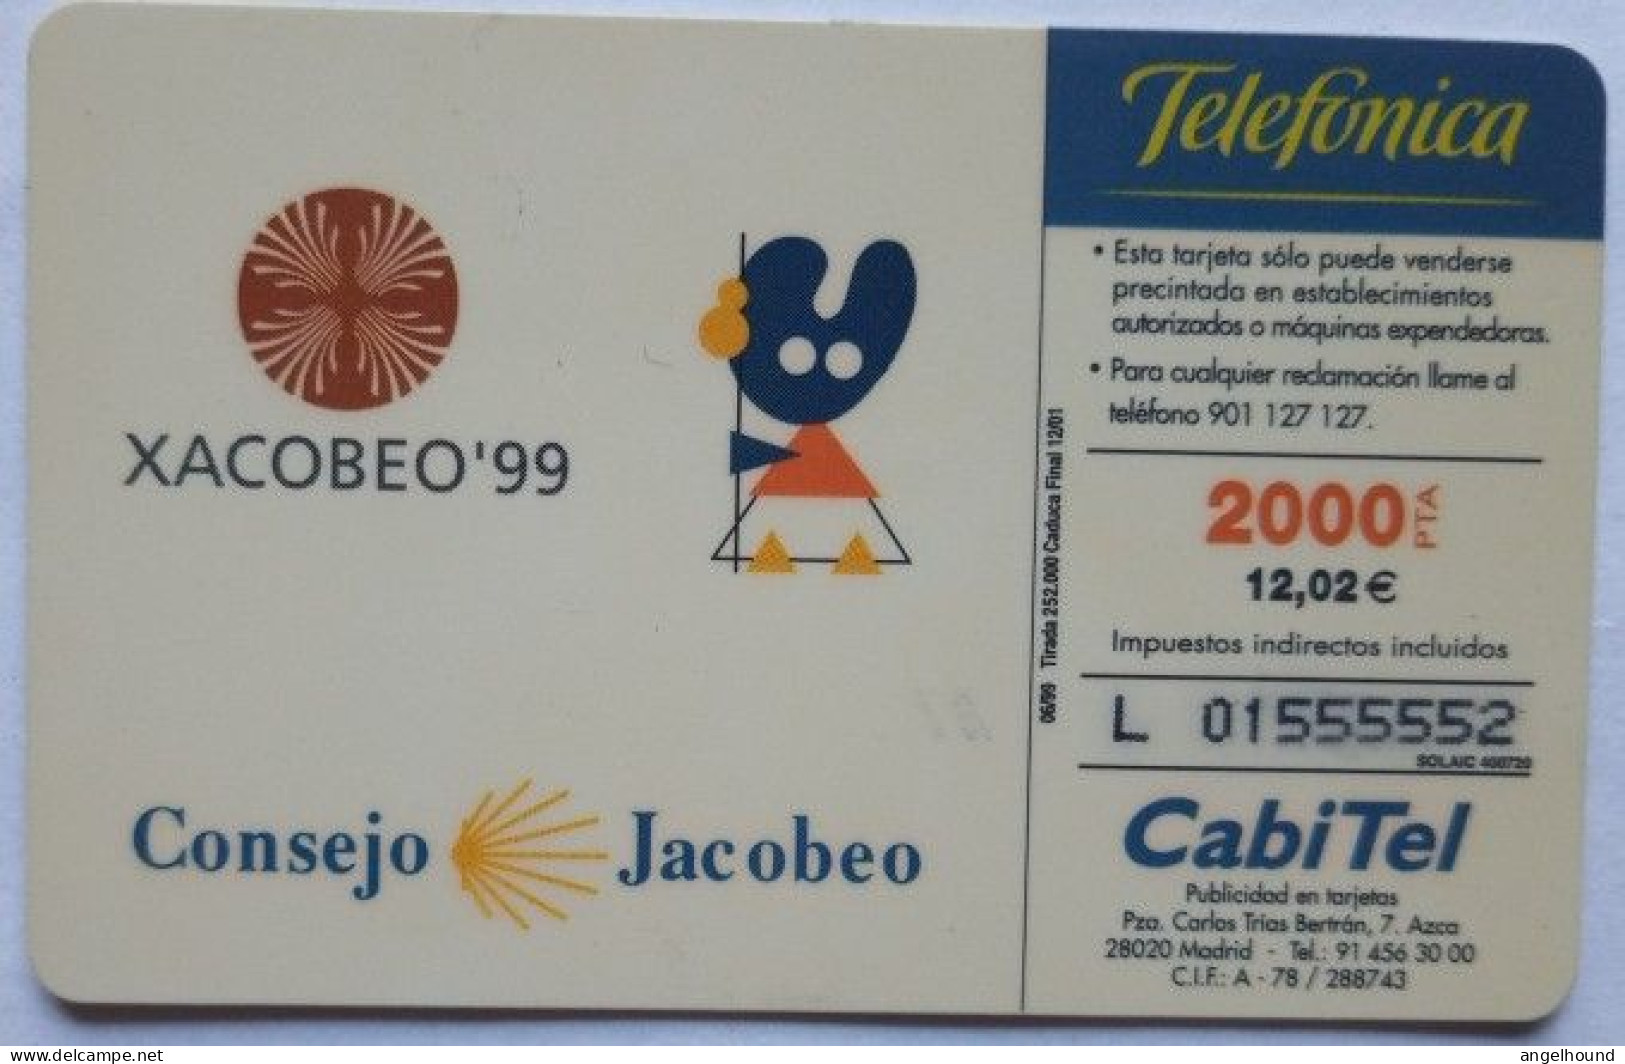 Spain 2000+100 Pta. Chip Card - Xacobeo 99 - Emissions Basiques